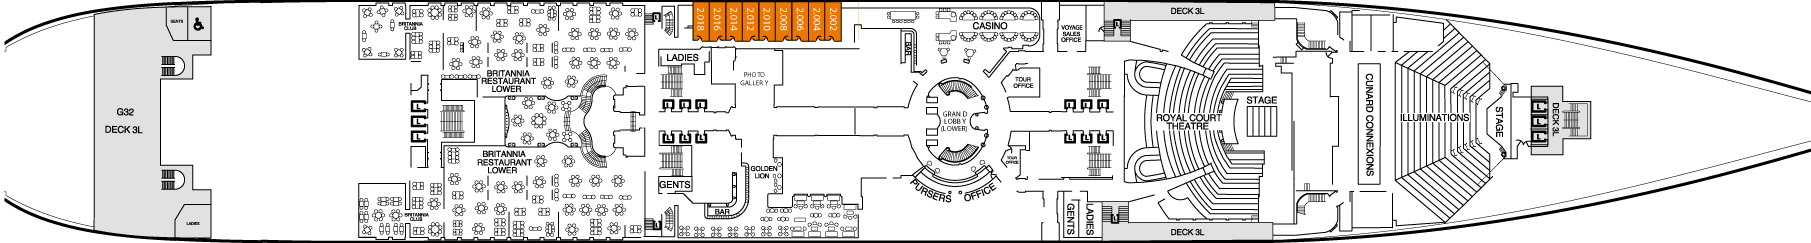 Планы палуб Queen Mary 2: Палуба 2